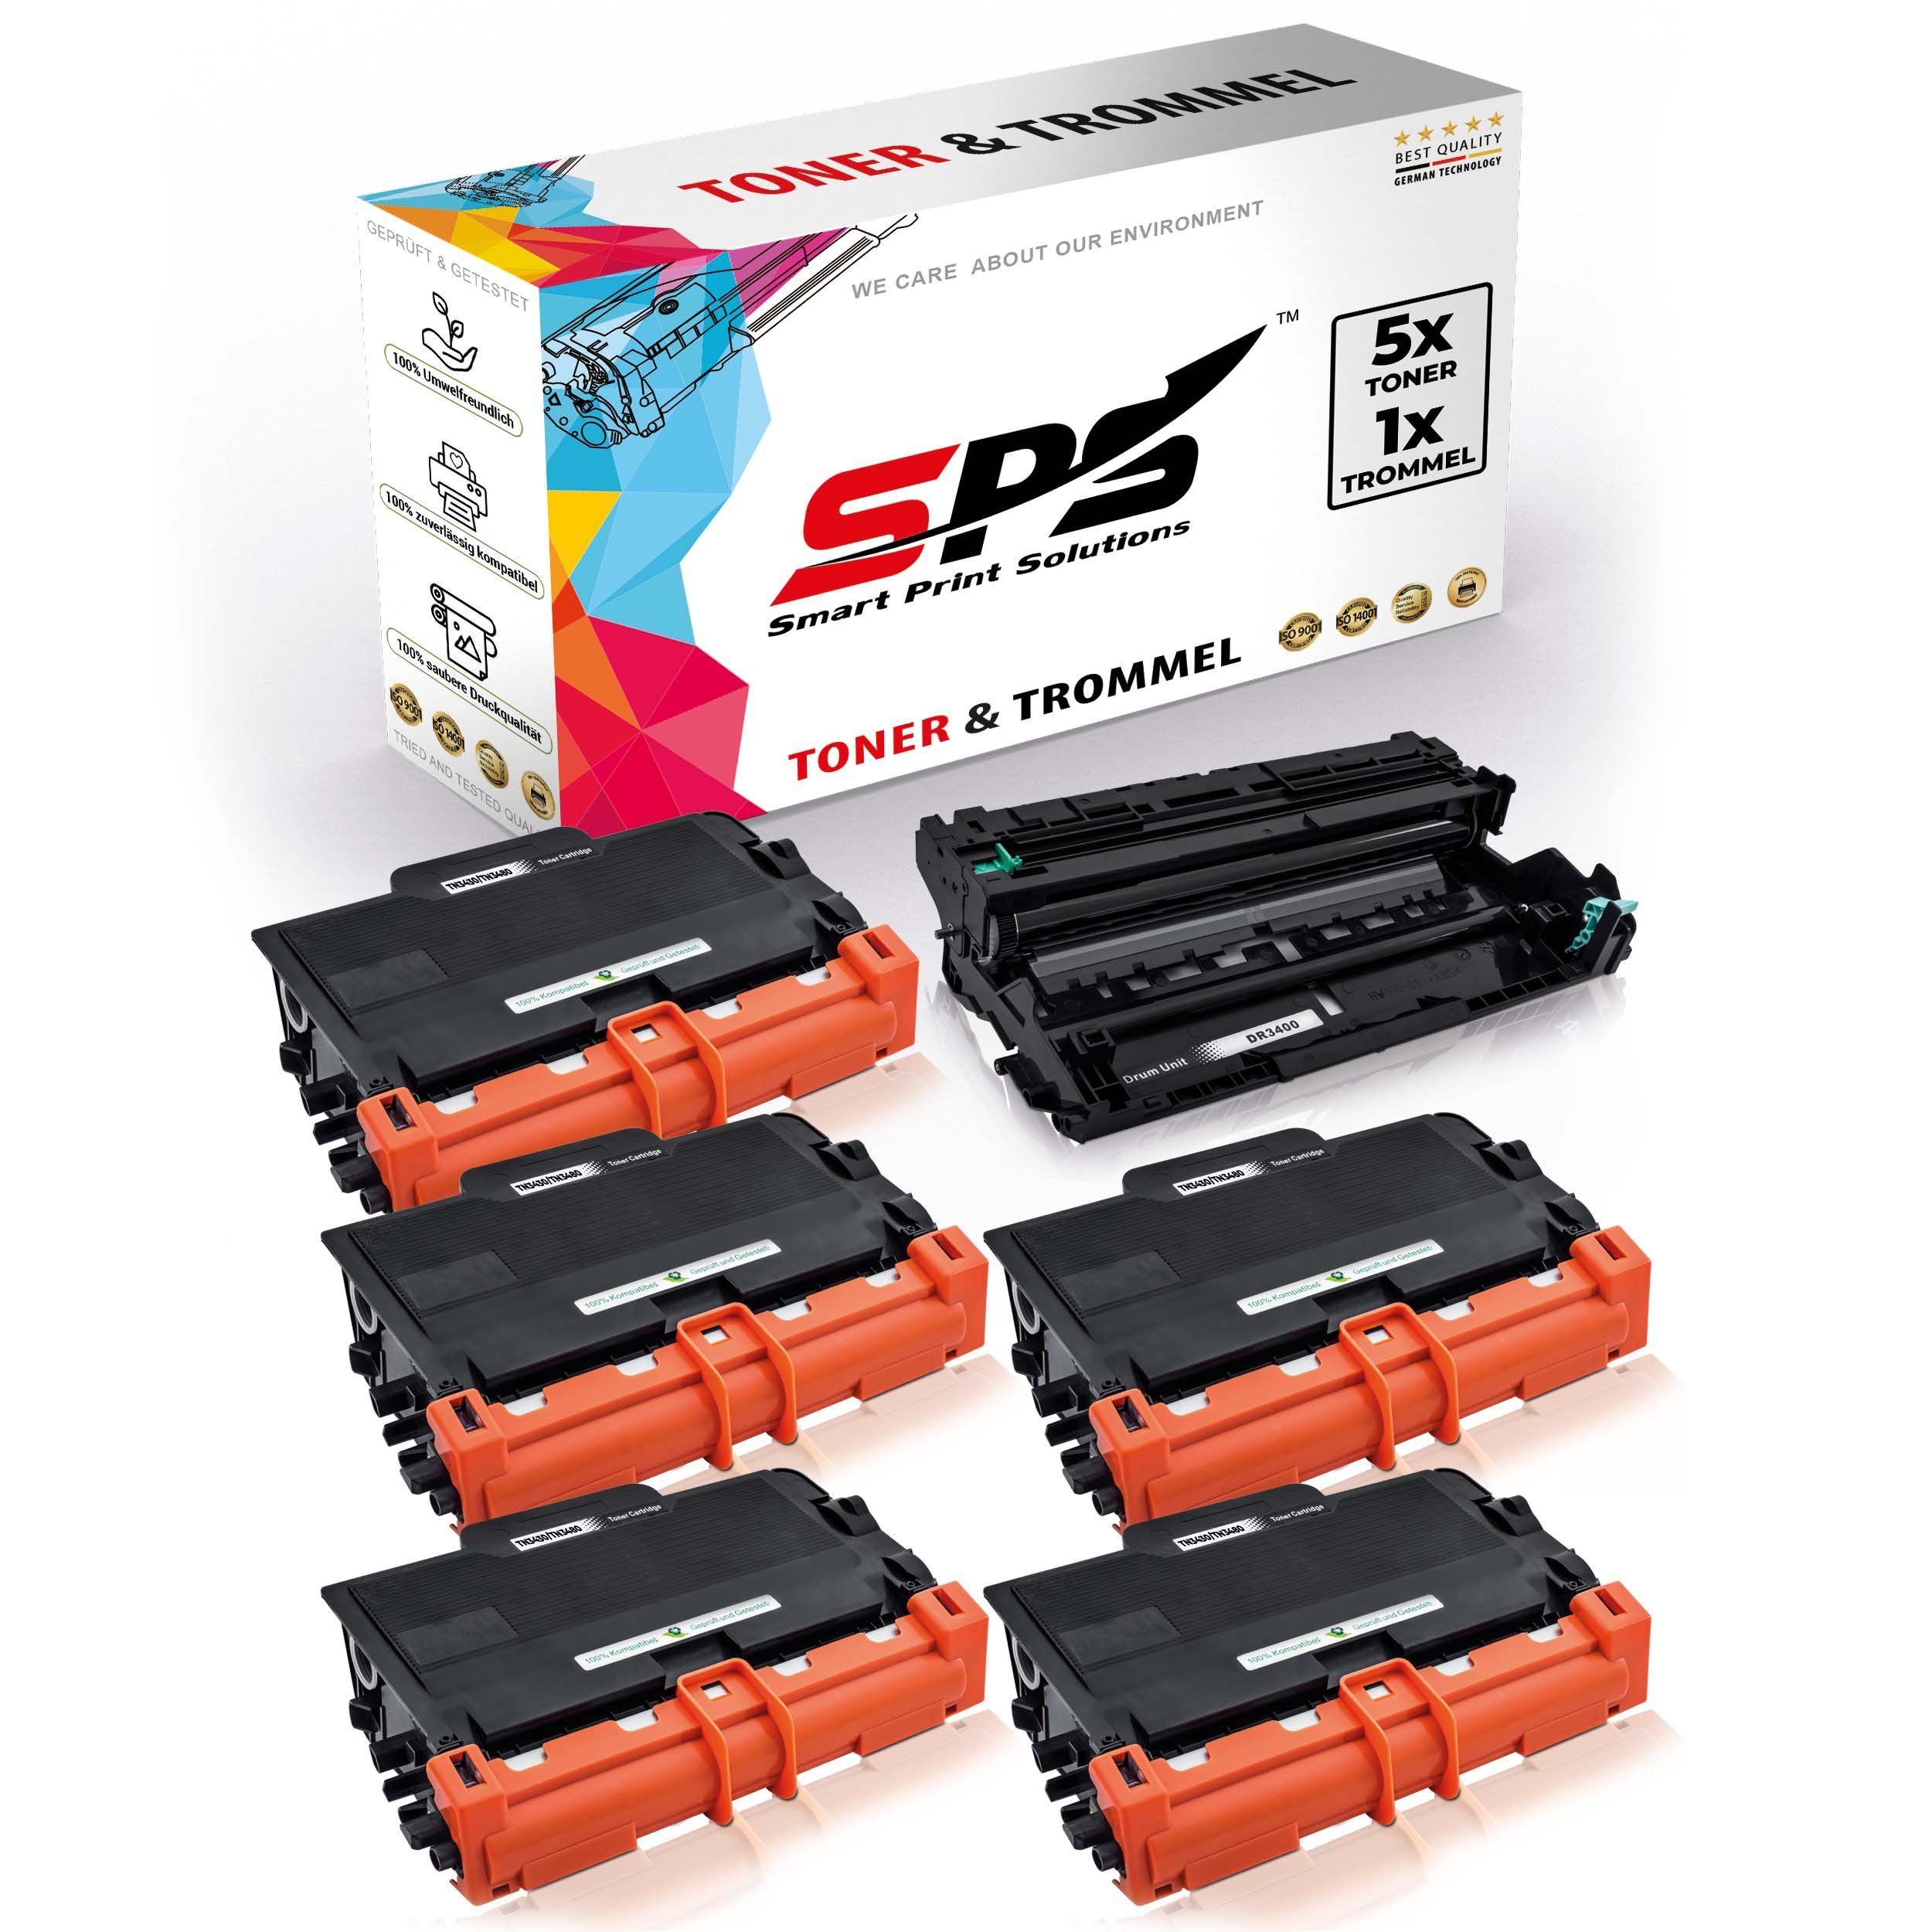 SPS Tonerkartusche TN-3430, DCP-L5600 (6er DR-3400 Brother Kompatibel Pack) für